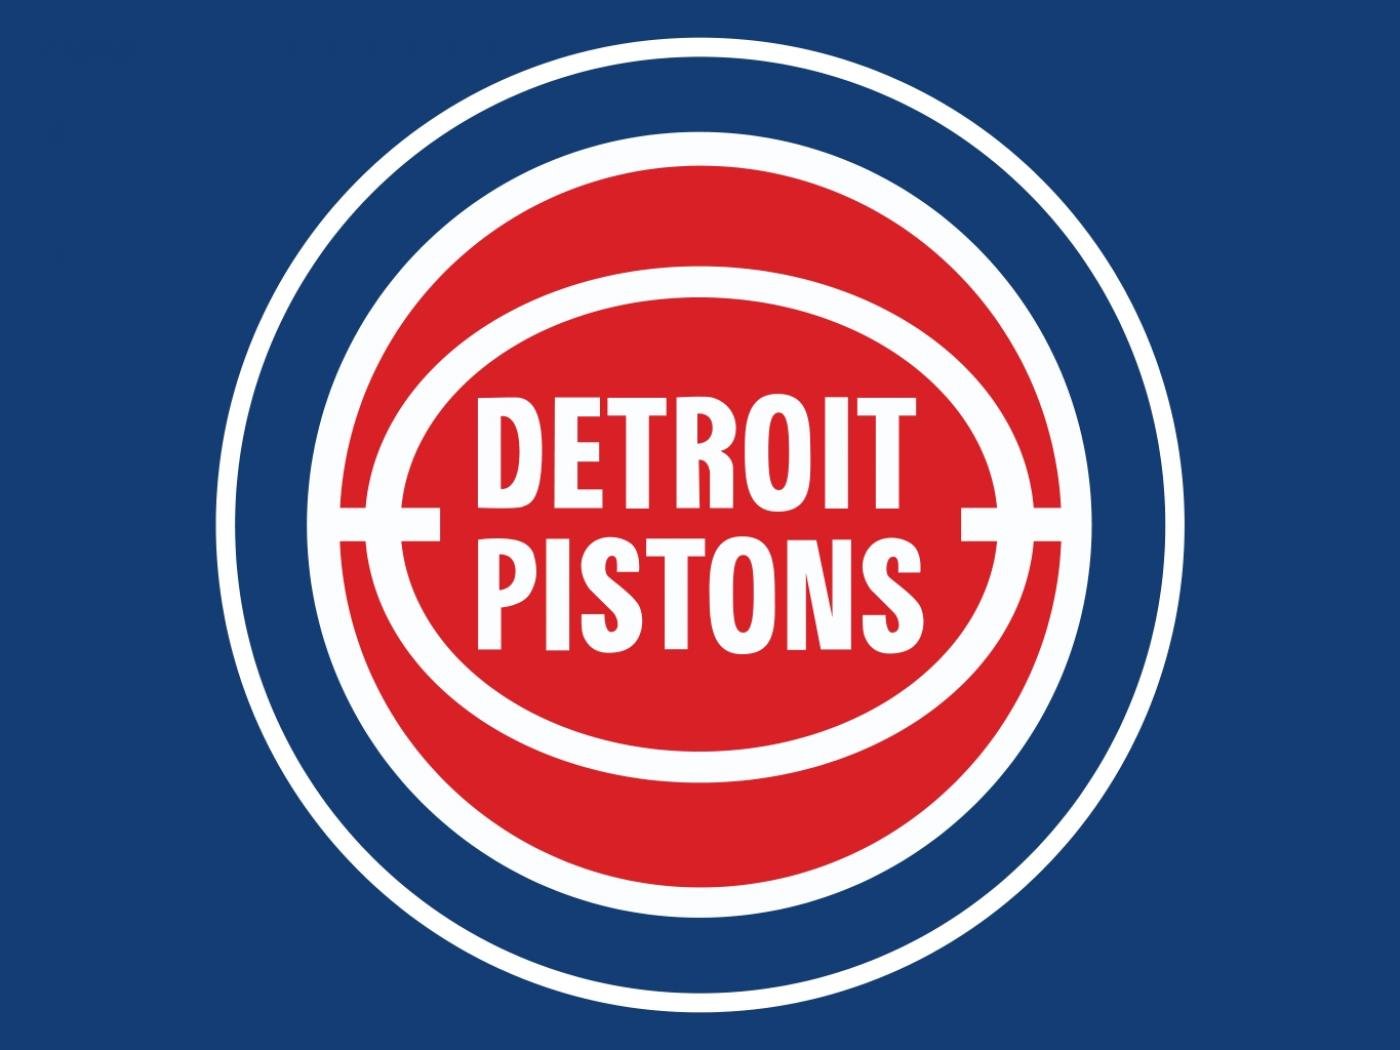 Best Detroit Pistons wallpaper ID:214767 for High Resolution hd 1400x1050 computer